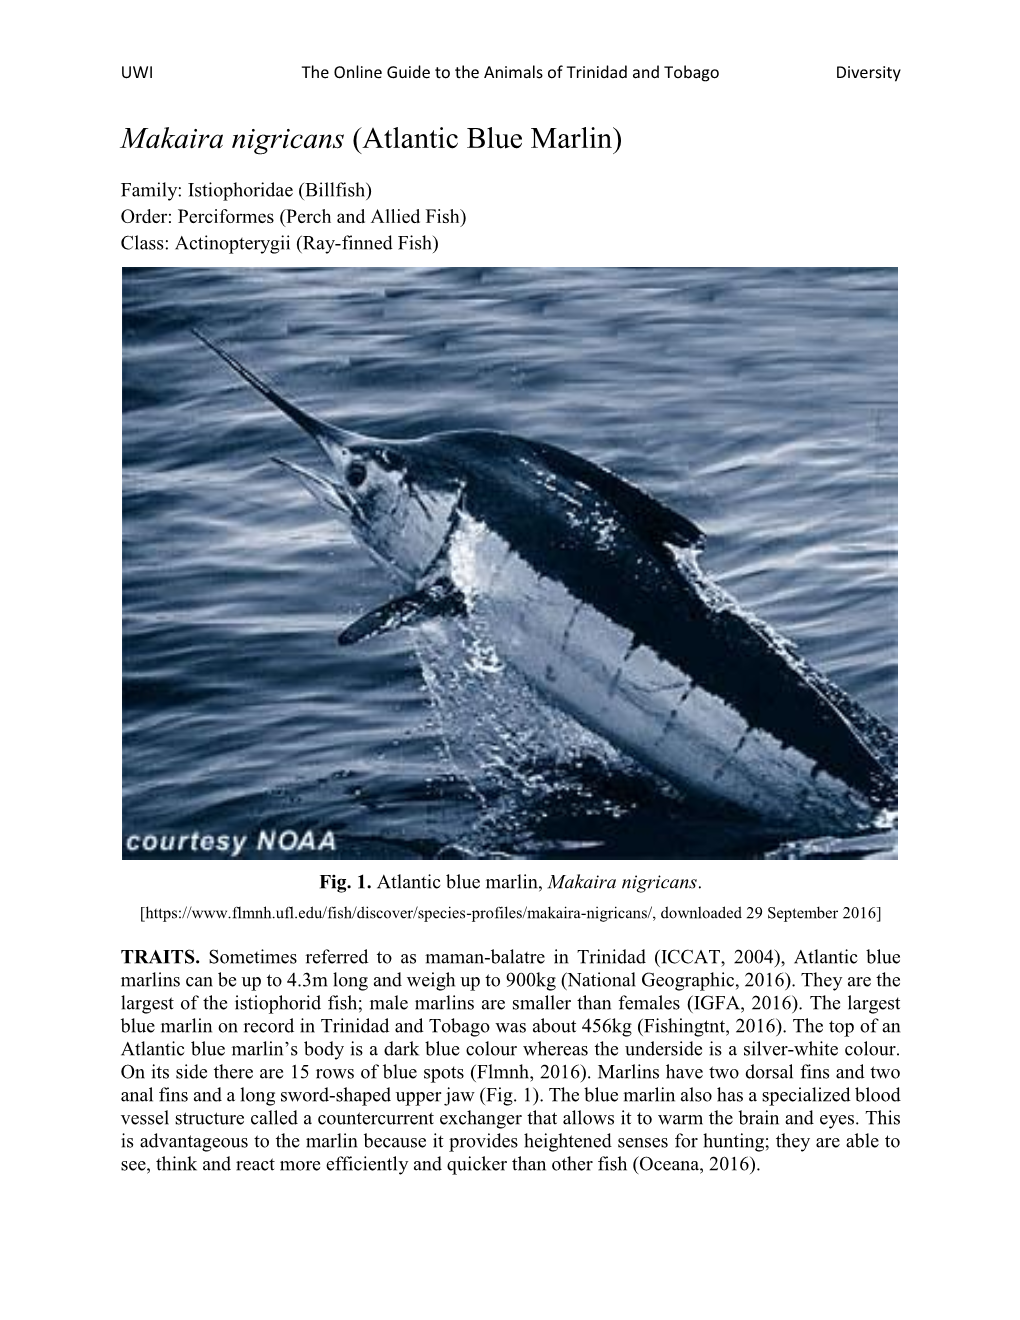 Makaira Nigricans (Atlantic Blue Marlin)